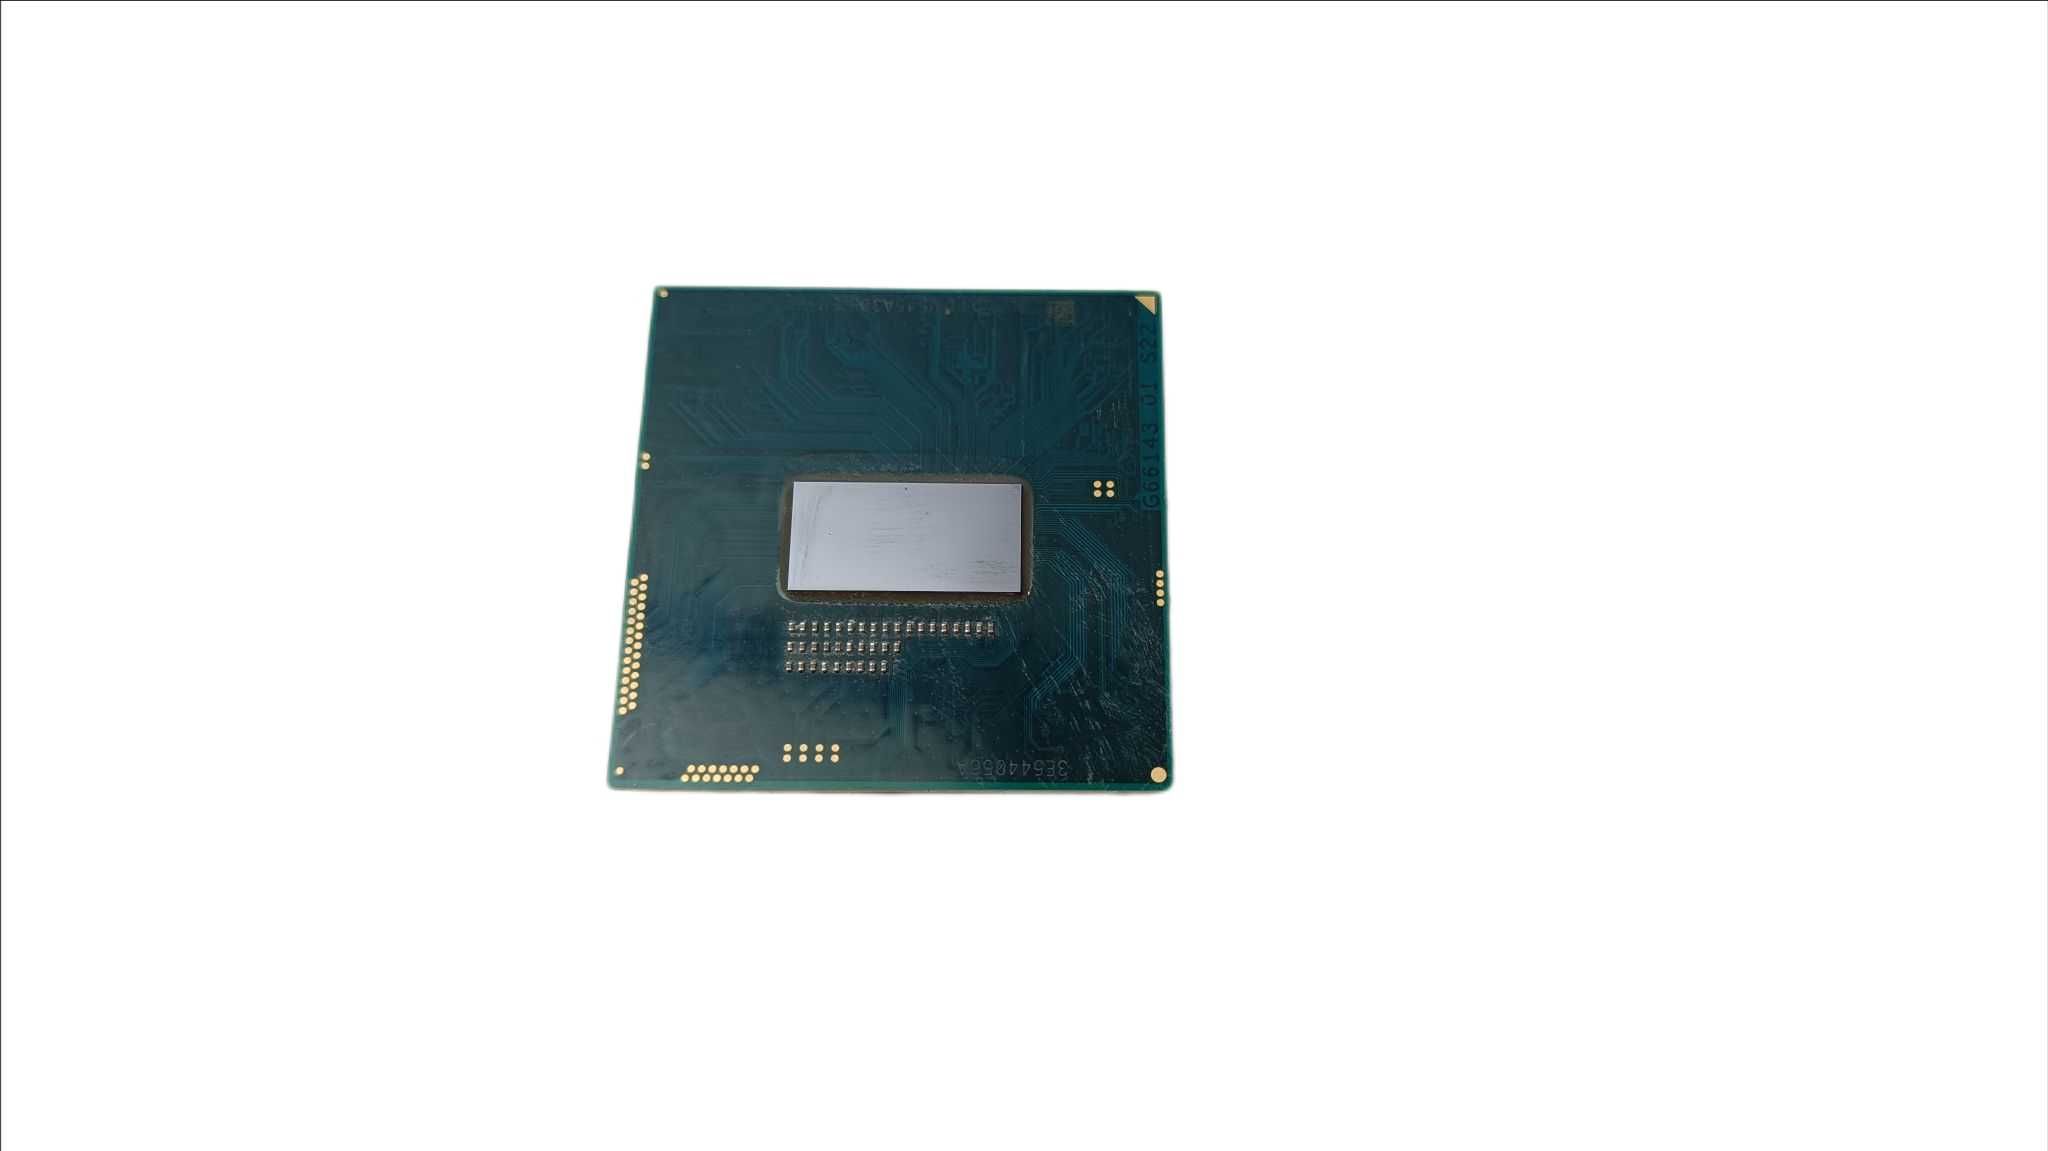 Procesor Intel i5-4310M 2.7 GHz